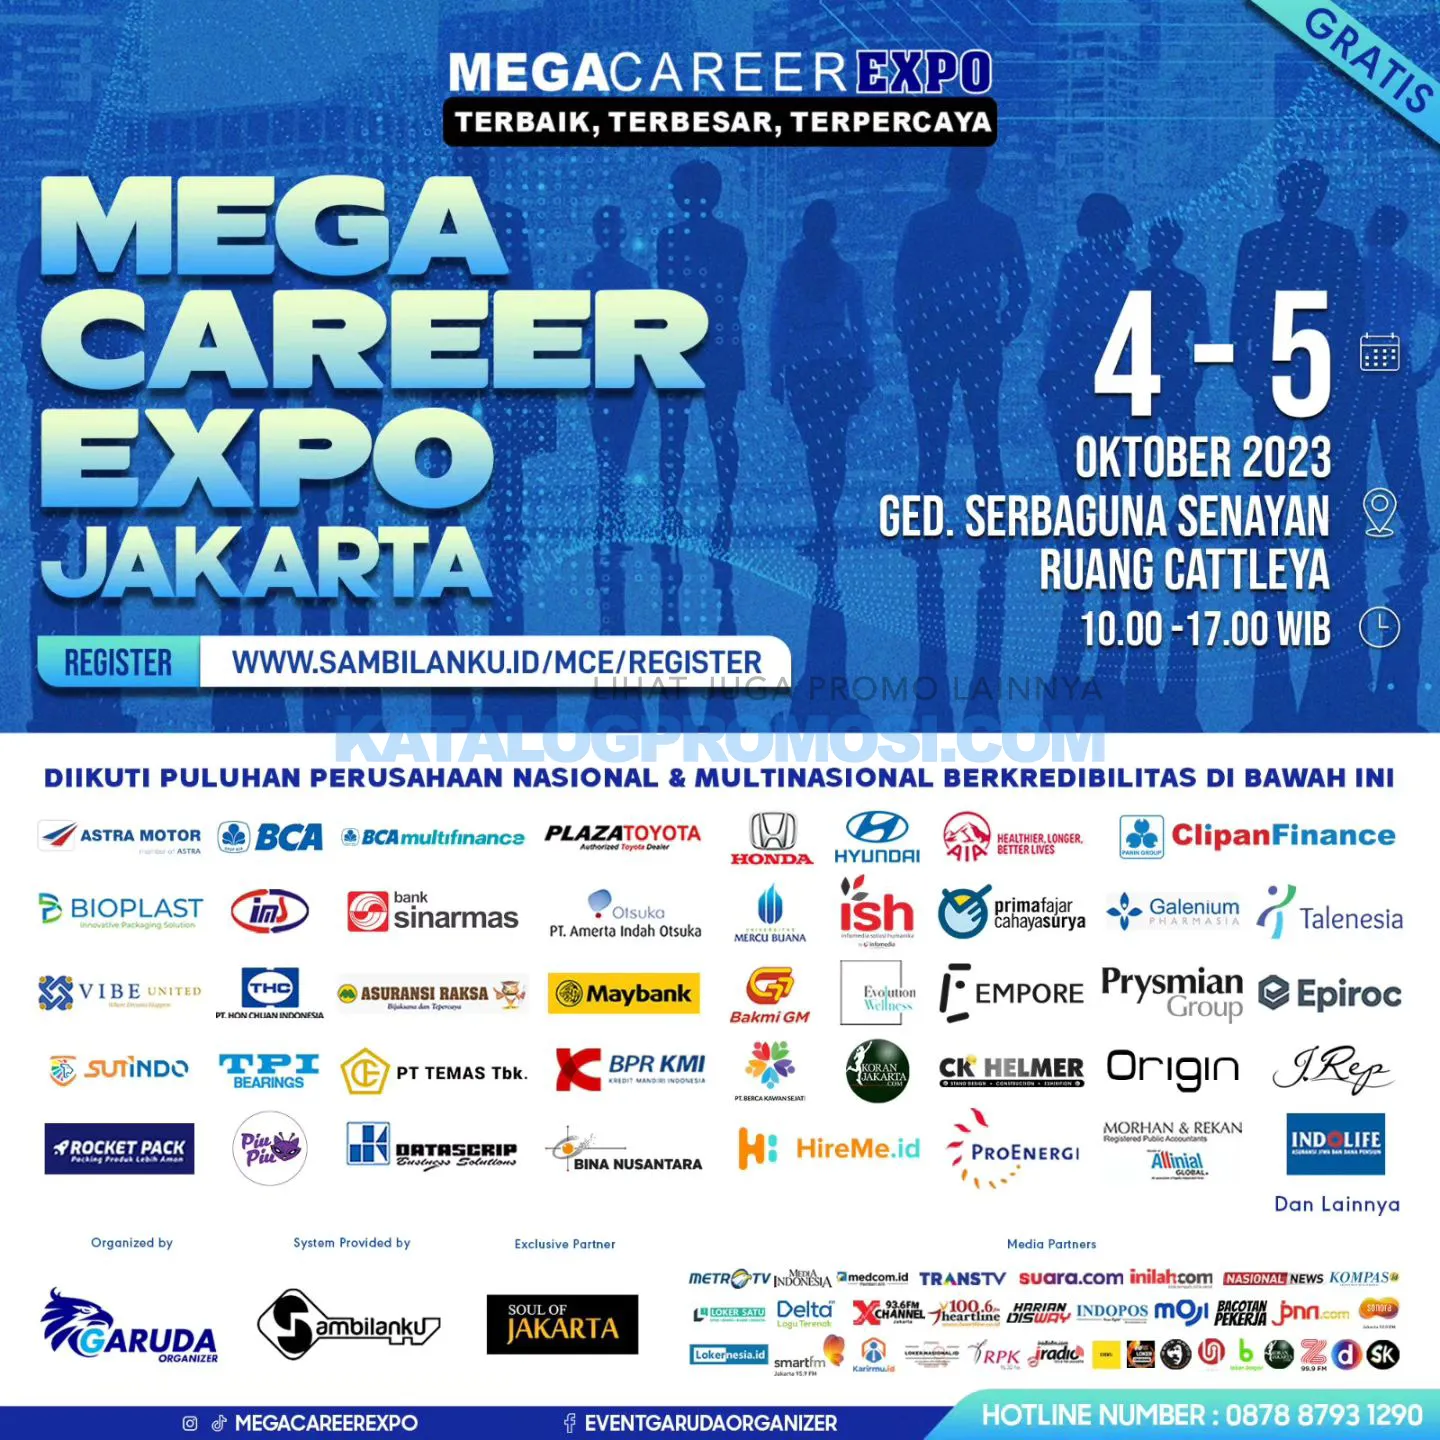 MEGA CAREER EXPO JAKARTA 2023